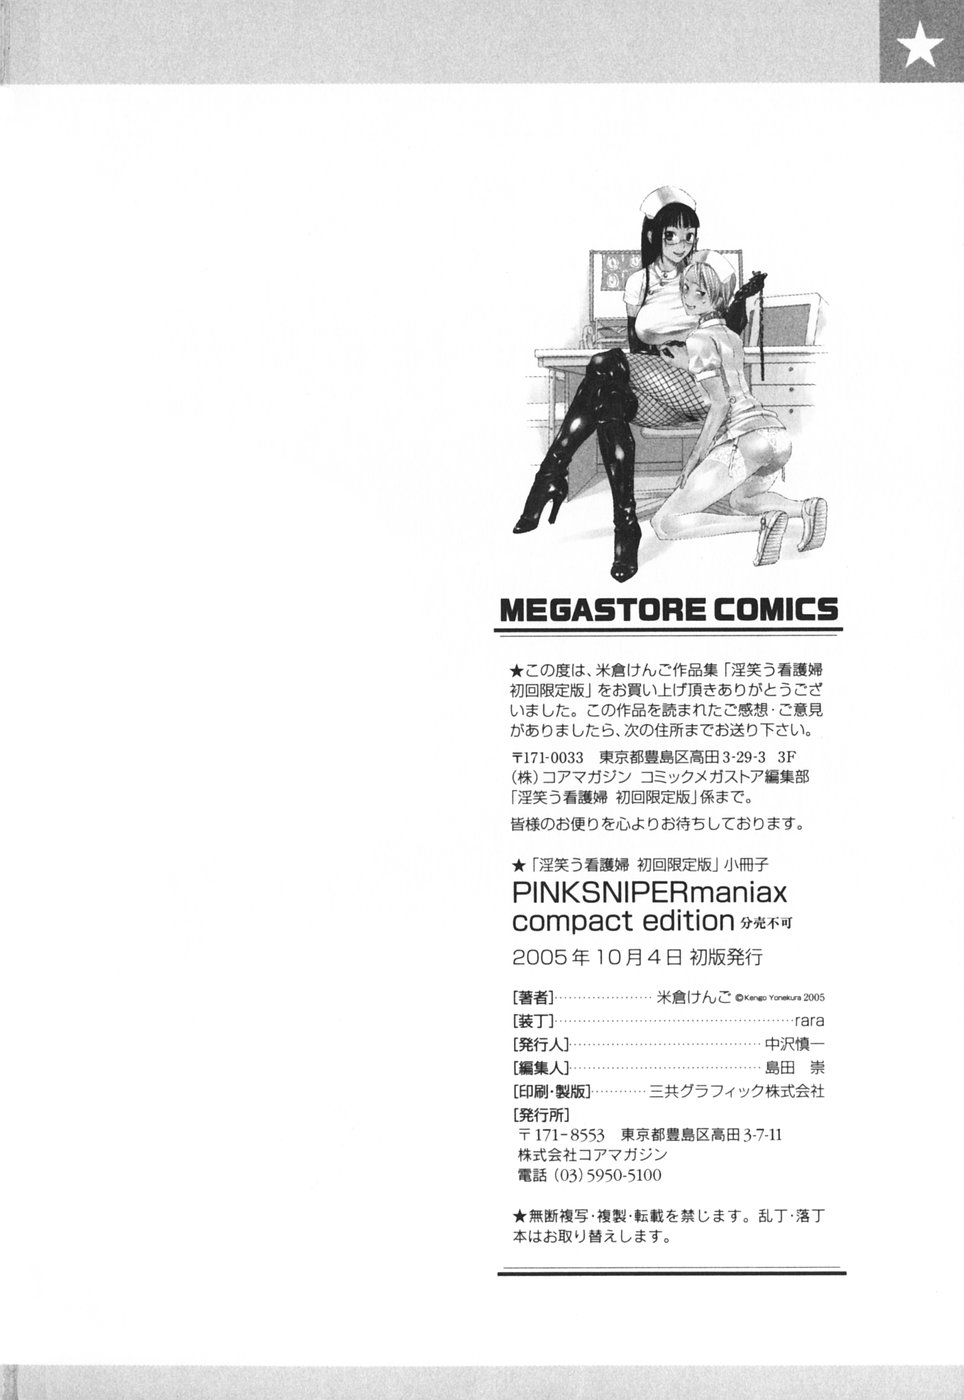 [Yonekura Kengo] Pink Sniper maniax compact edition [米倉けんご] PINKSNIPER maniax compact edition